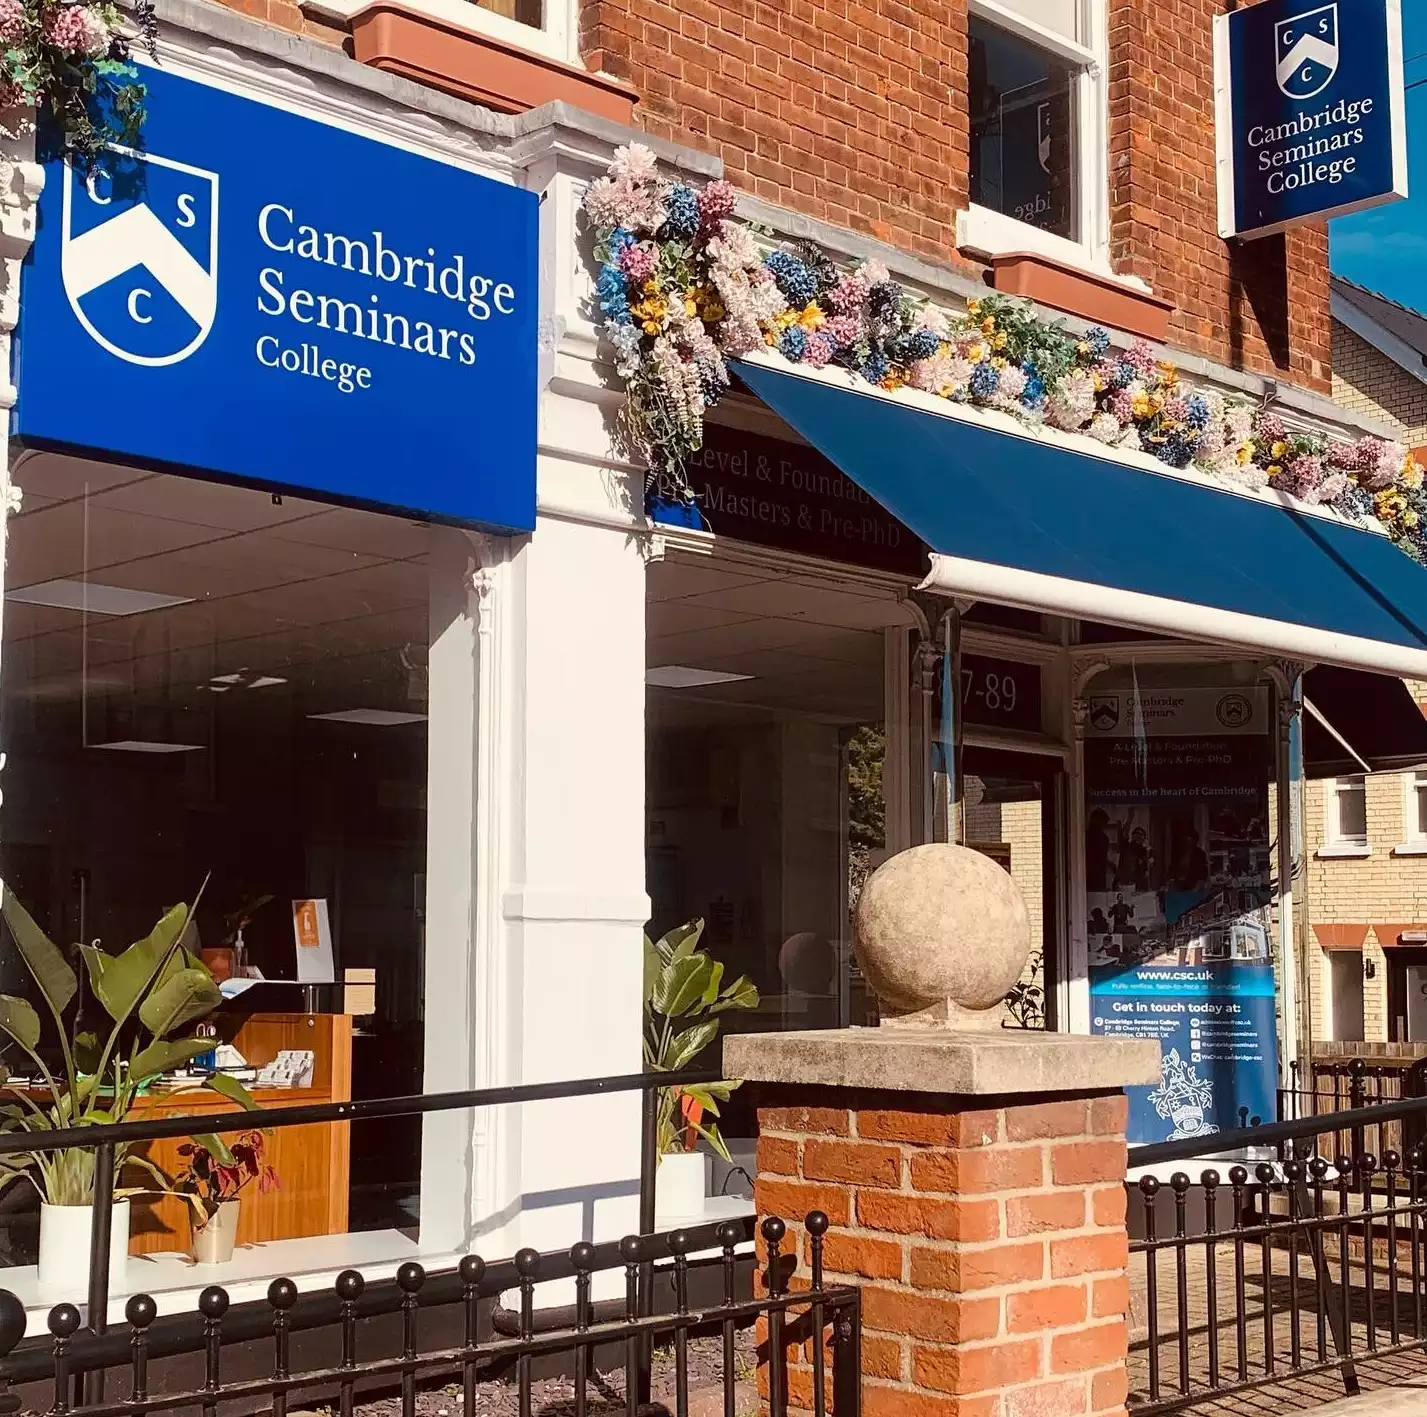 معهد كامبريدج سيمينارز Cambridge Seminars College